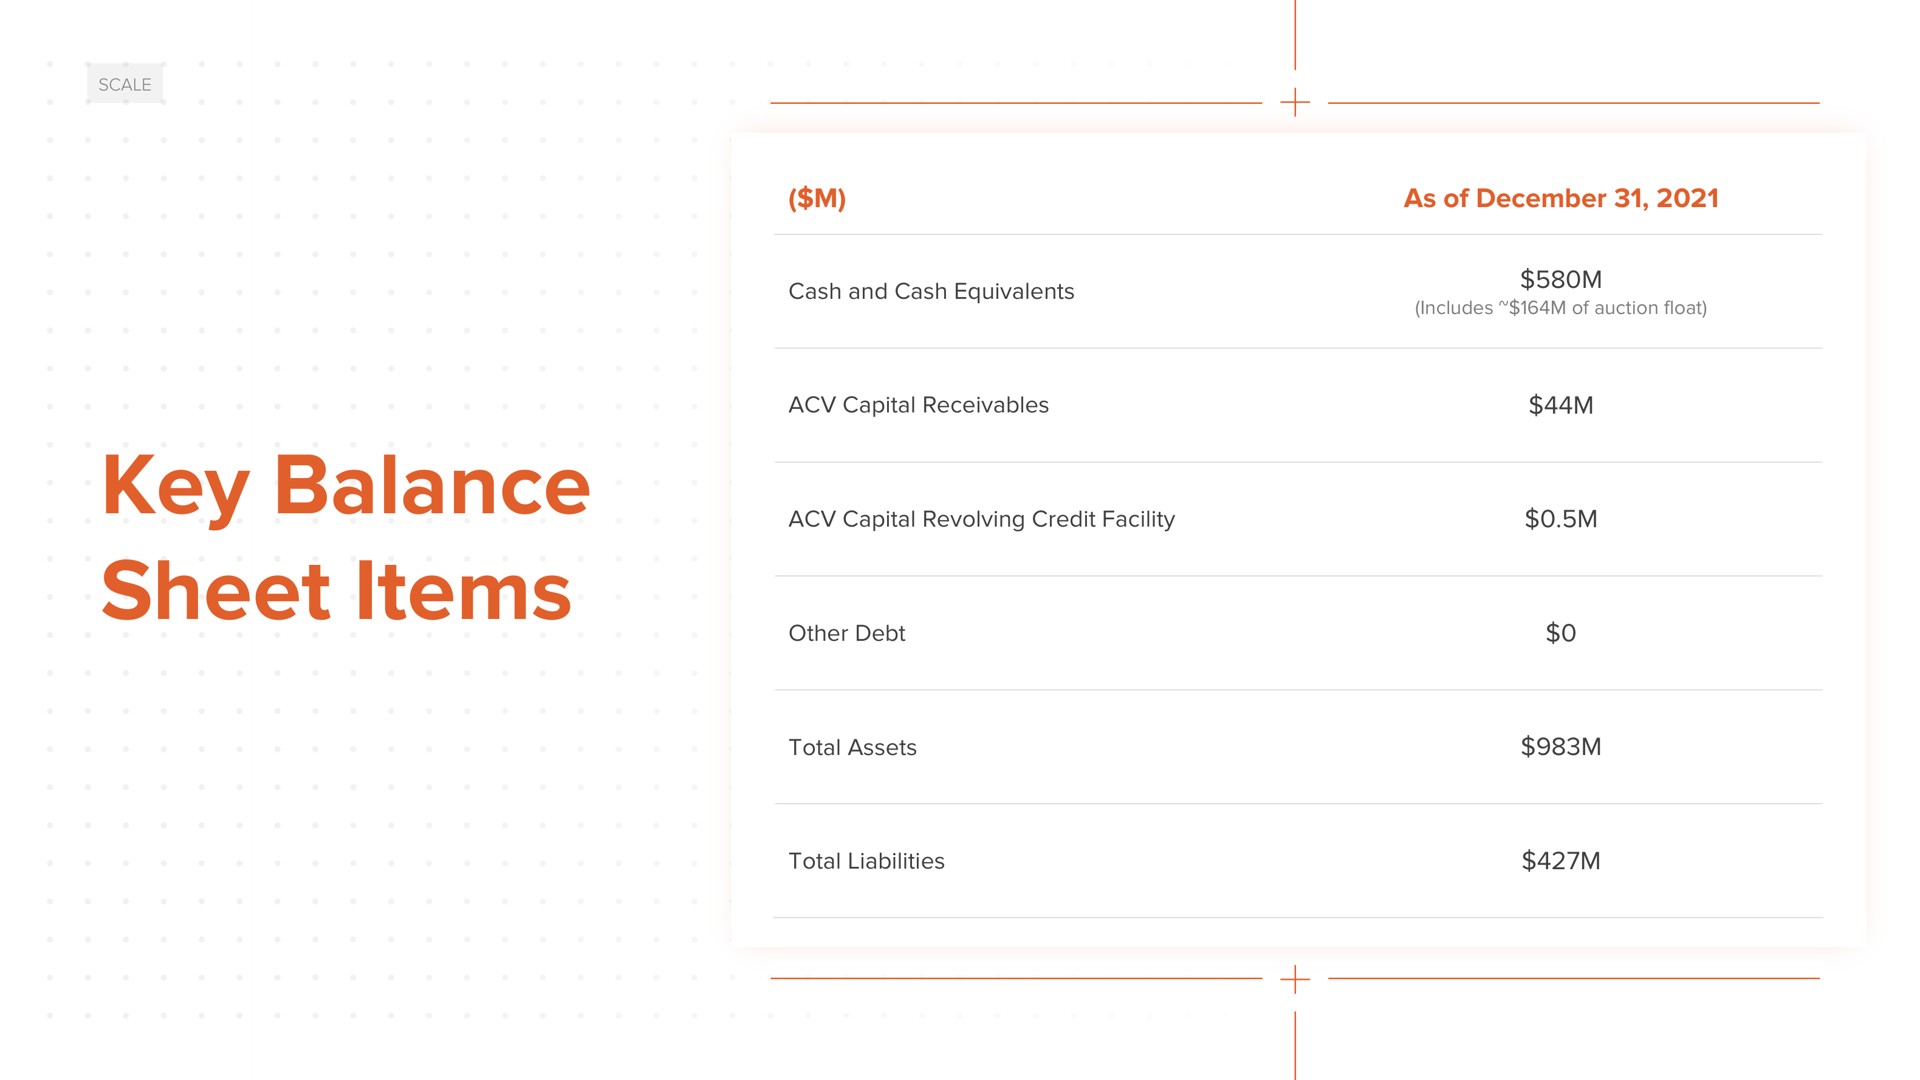 key balance sheet items | ACV Auctions